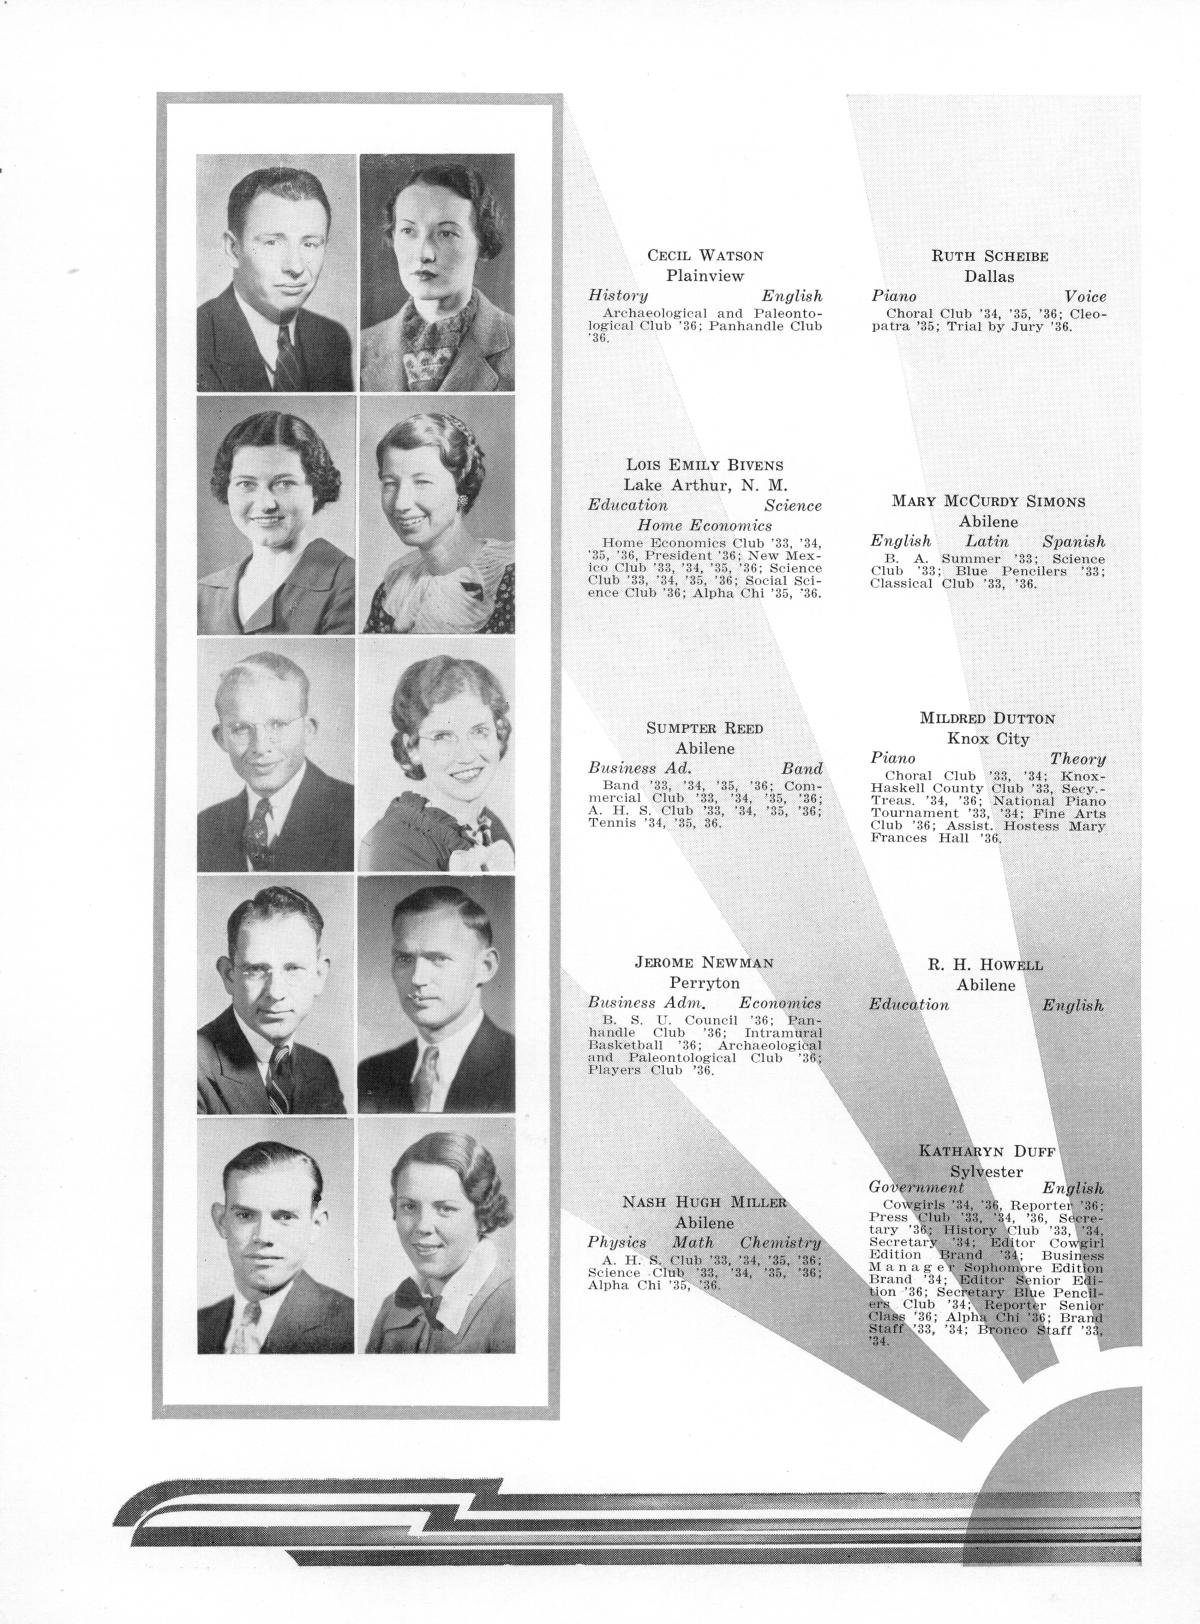 The Bronco, Yearbook of Hardin-Simmons University, 1936
                                                
                                                    43
                                                